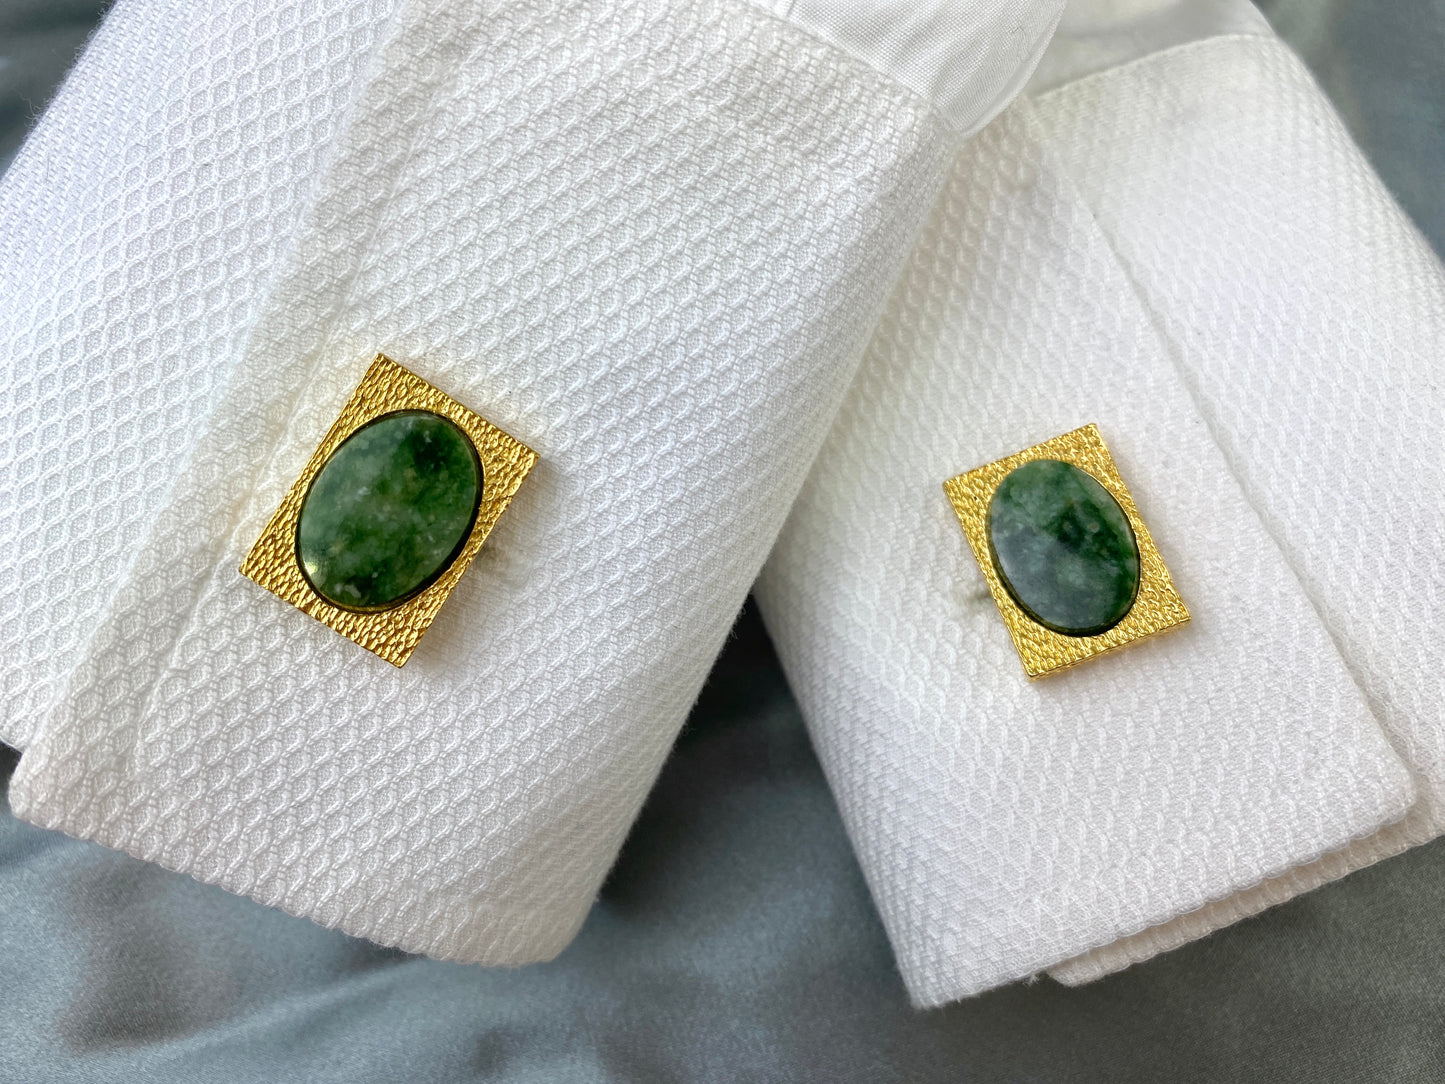 Vintage Christian Dior Rectangular Cufflinks & Tie Tack Set, Gold with Green Oval Jade